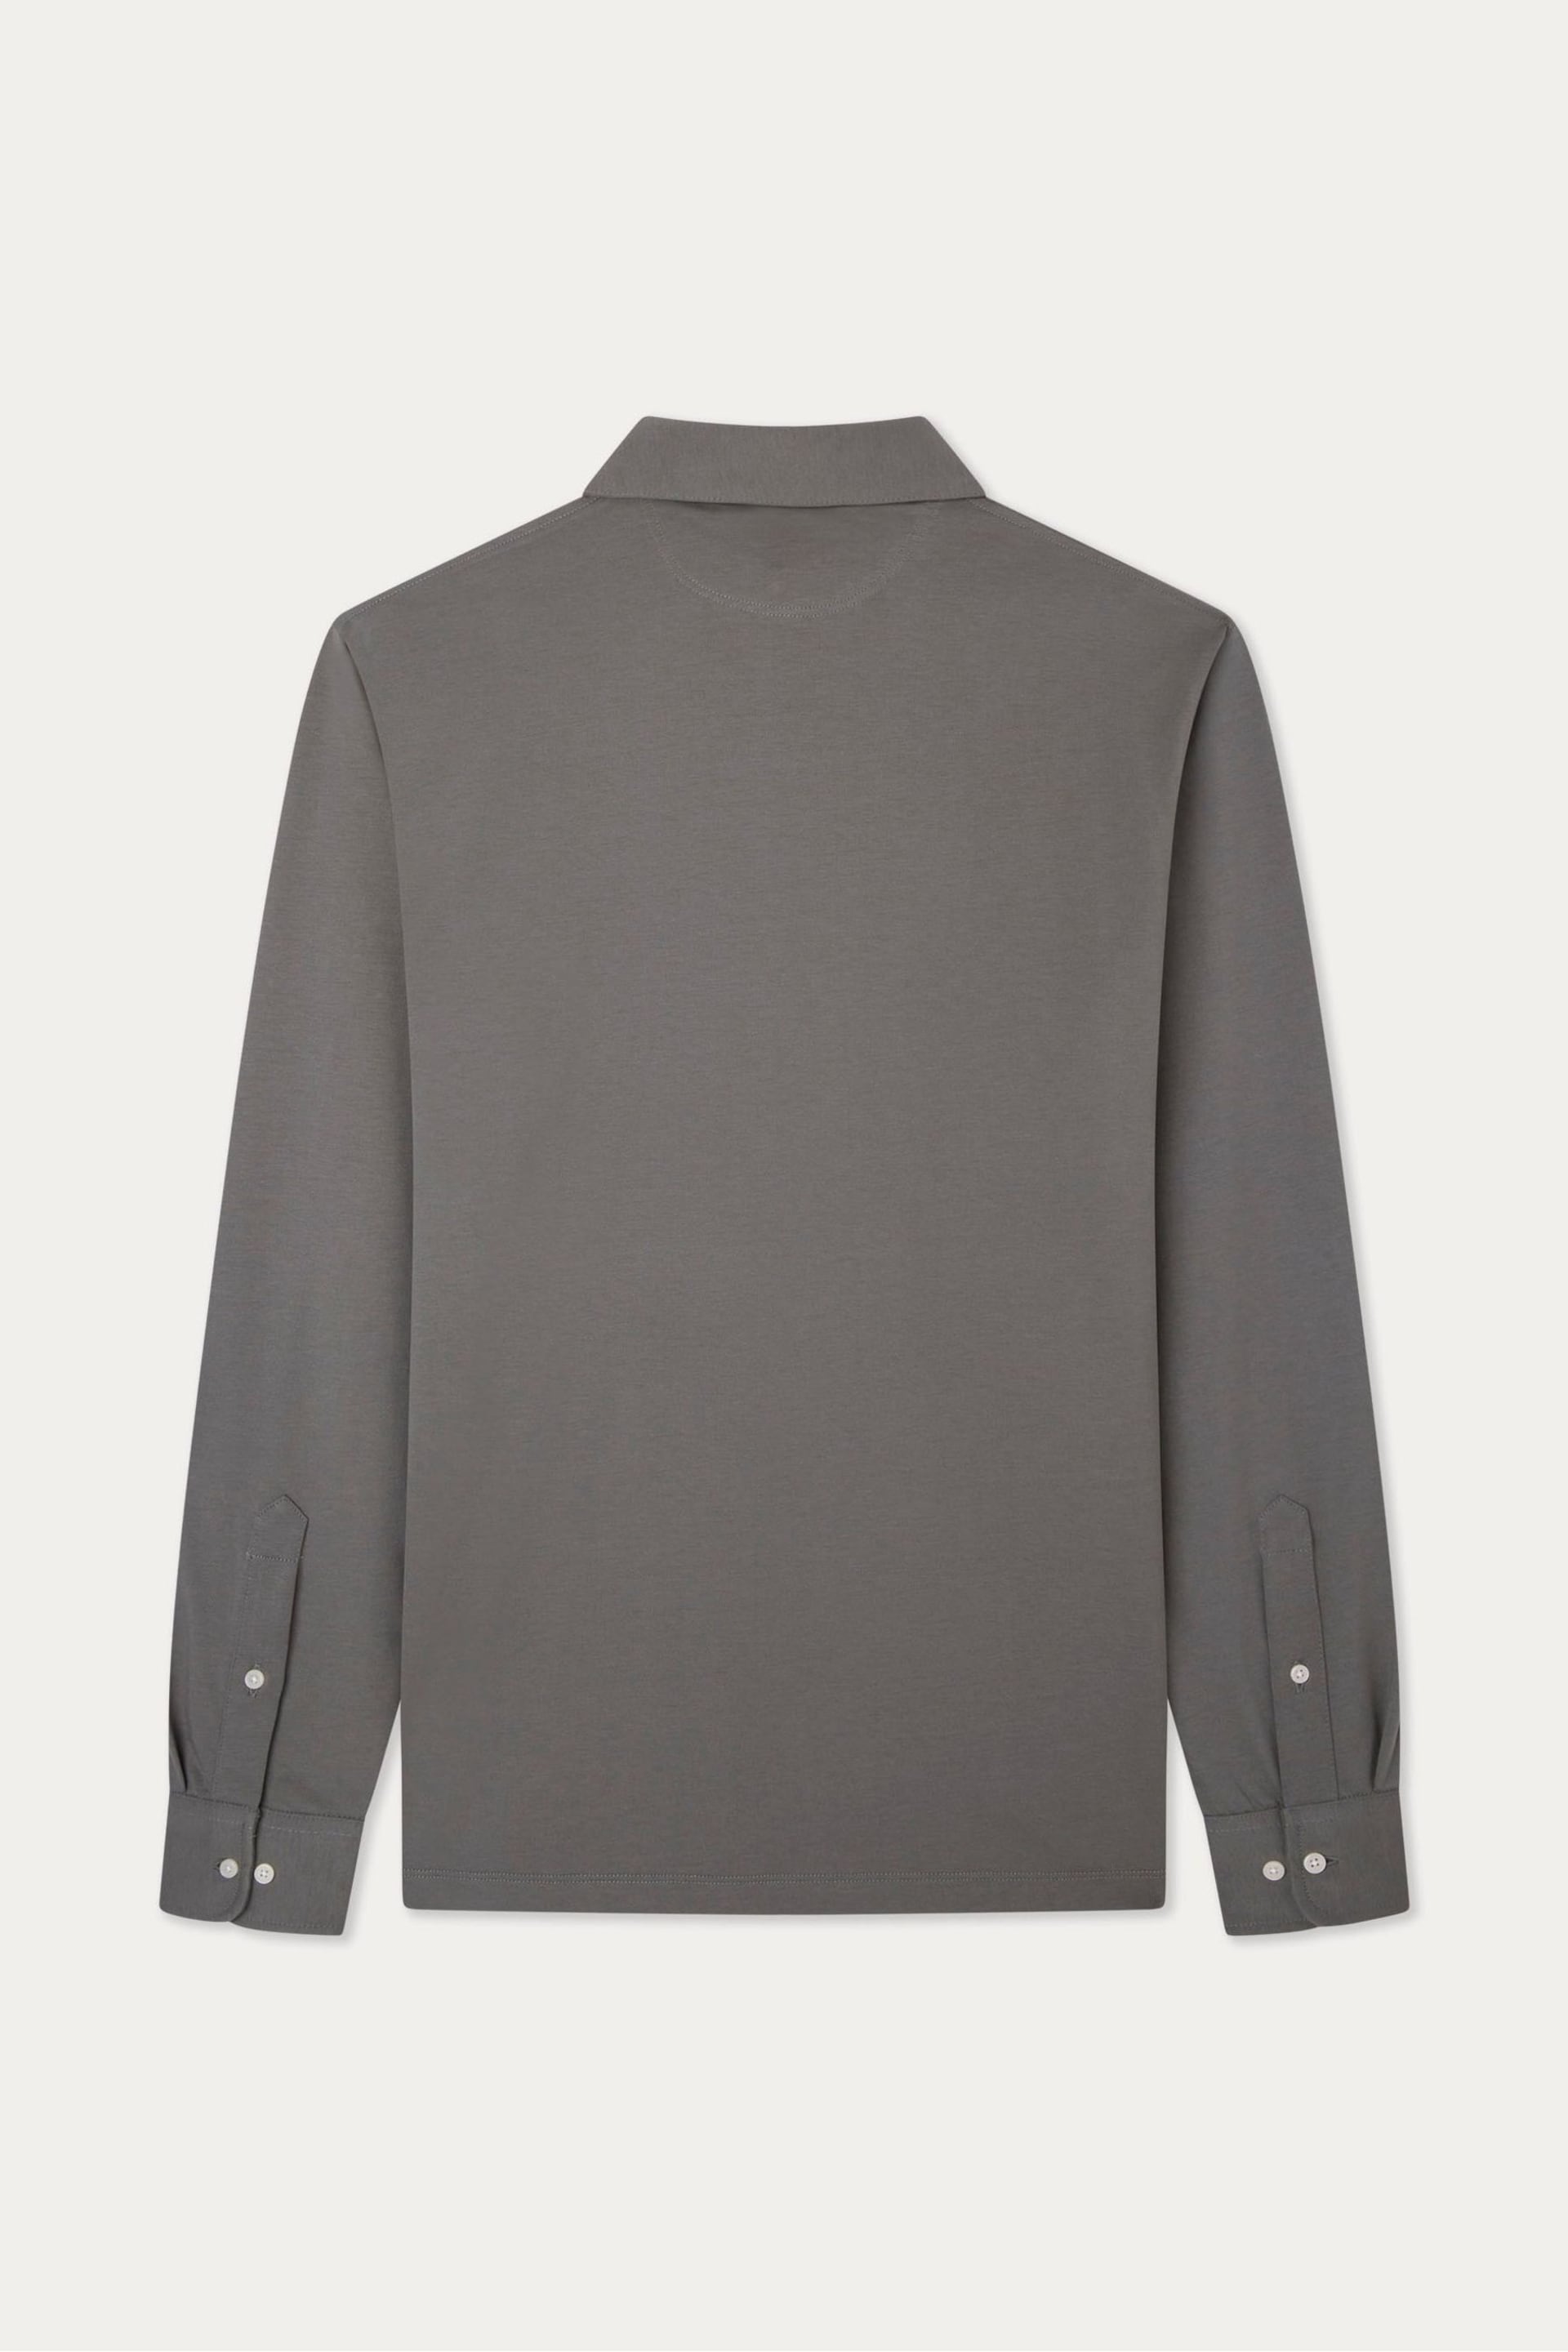 Hackett London Men Grey Polo Shirt - Image 2 of 3